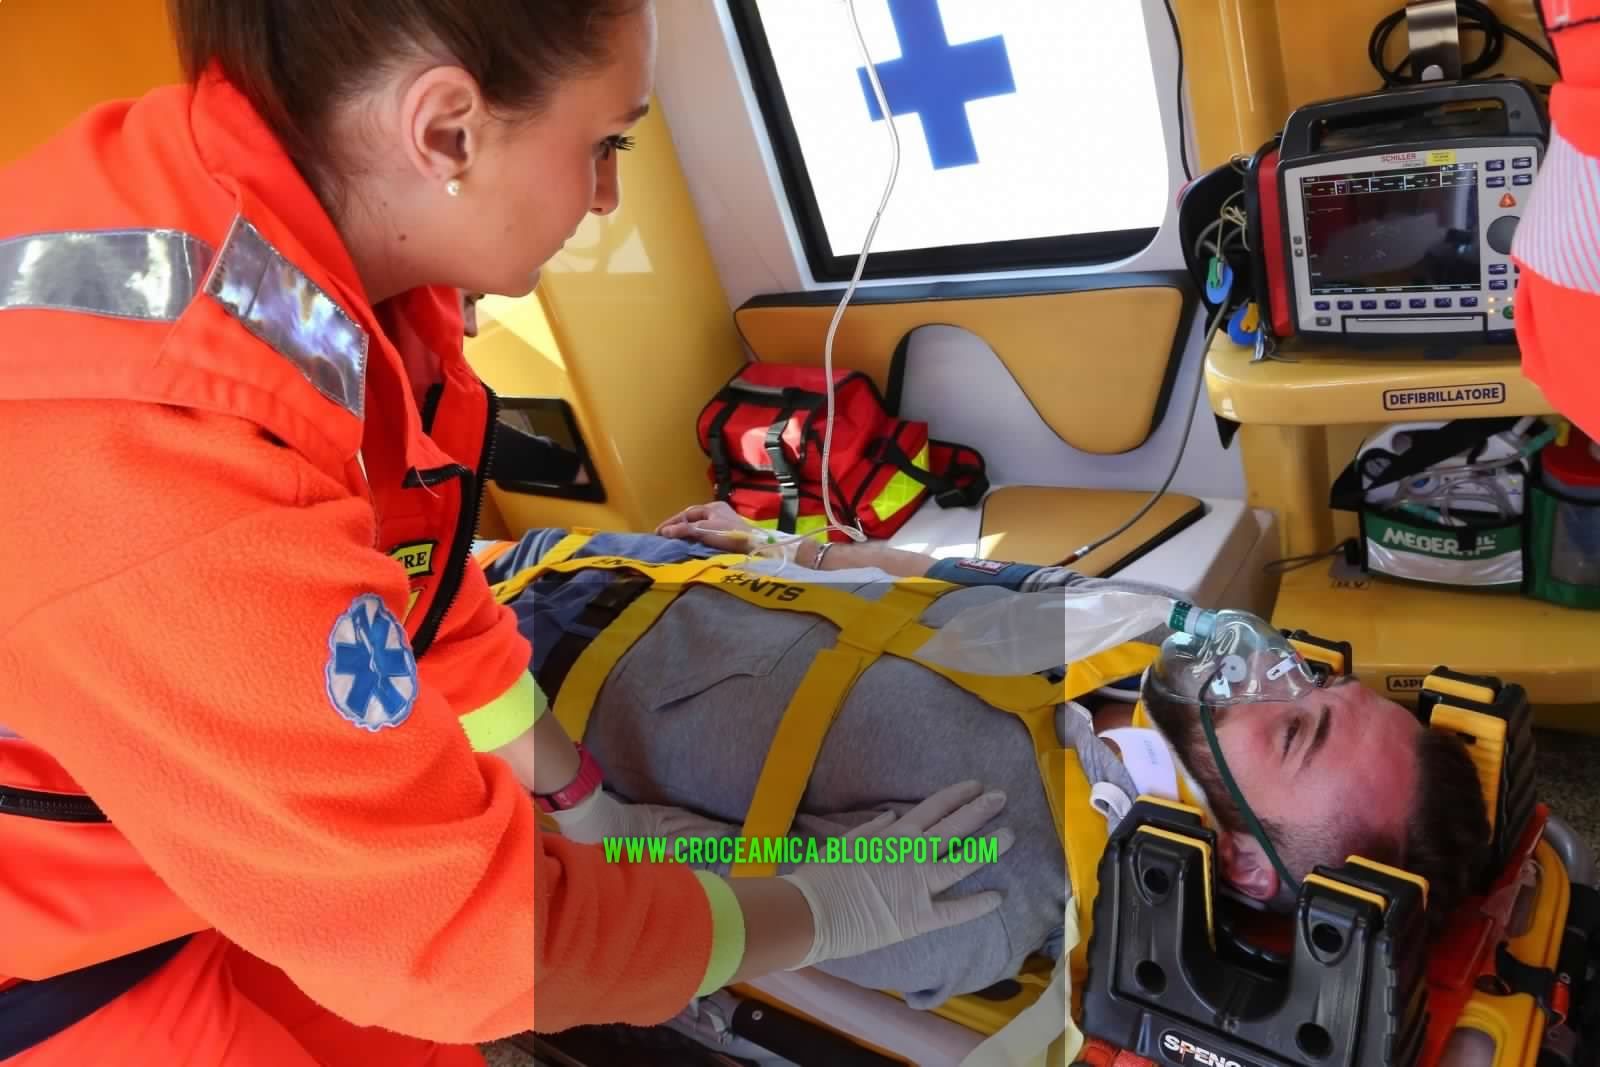 Servizio Ambulanze Caserta